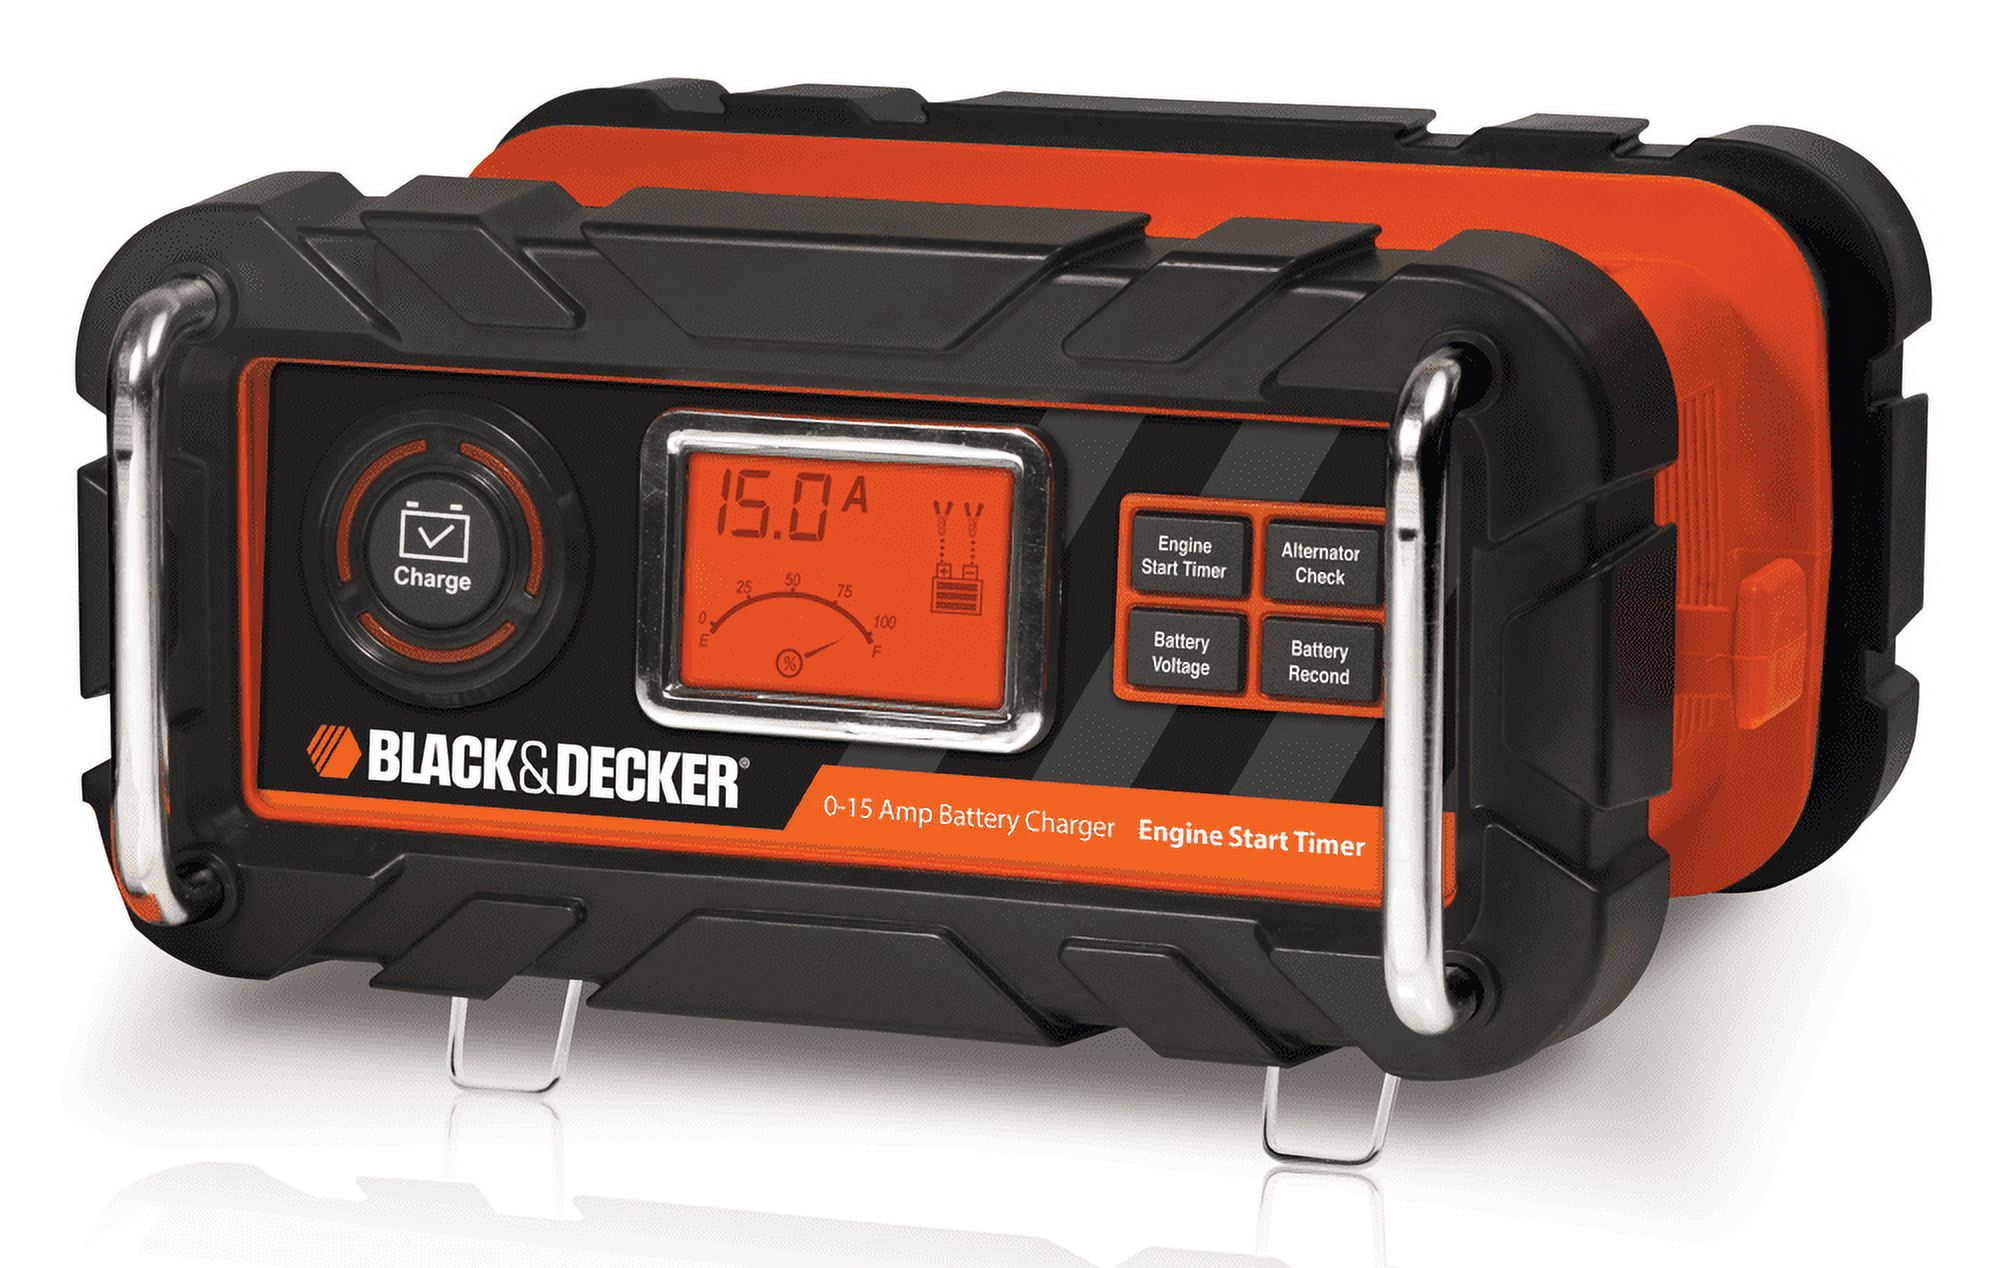 BLACK+DECKER BC15BD Fully Automatic 15 Amp 12V Bench Battery